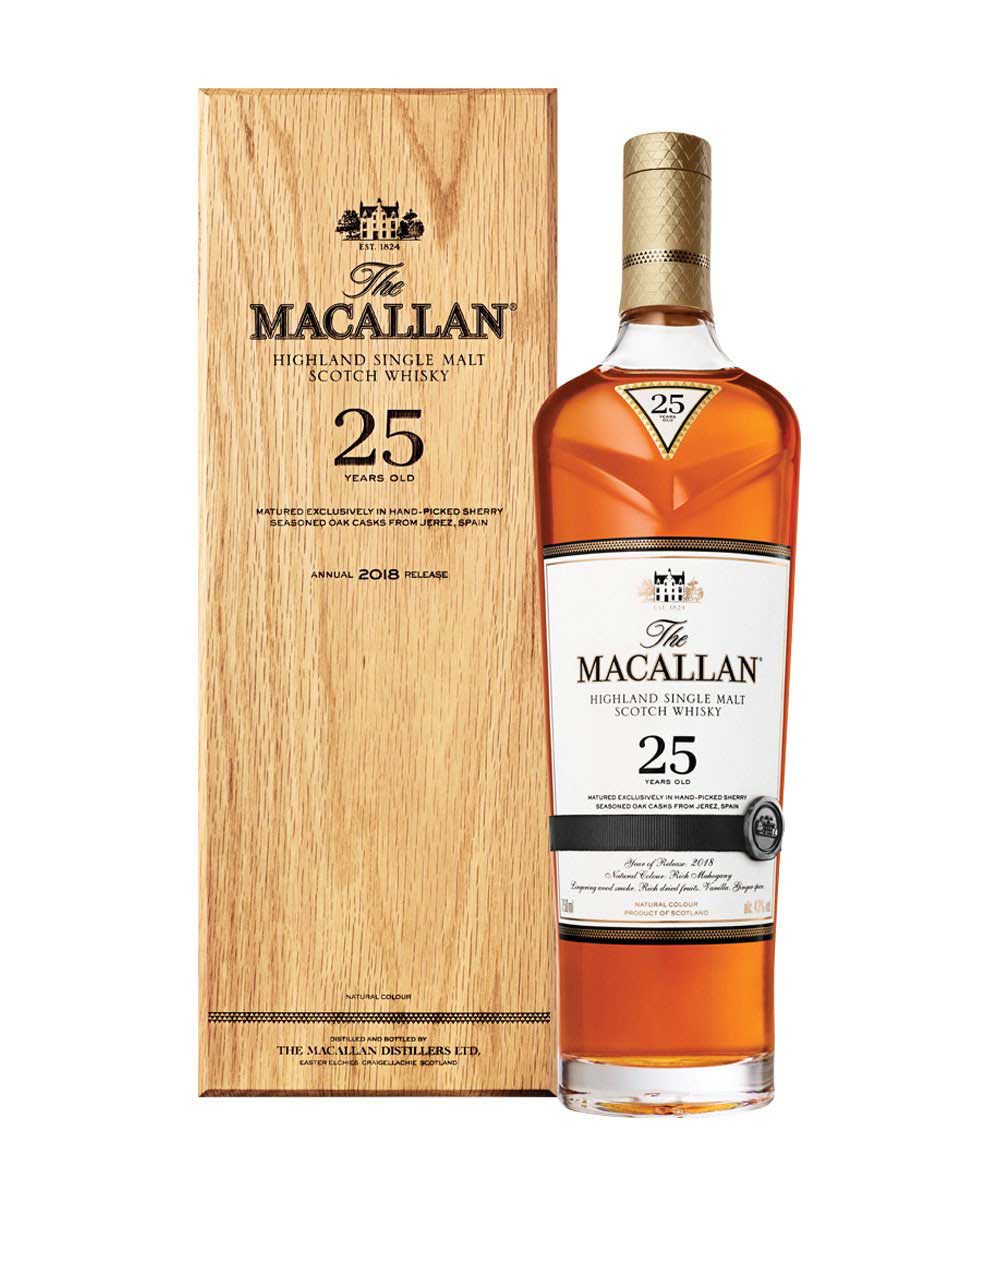 The Macallan Sherry Oak 25 Year Old